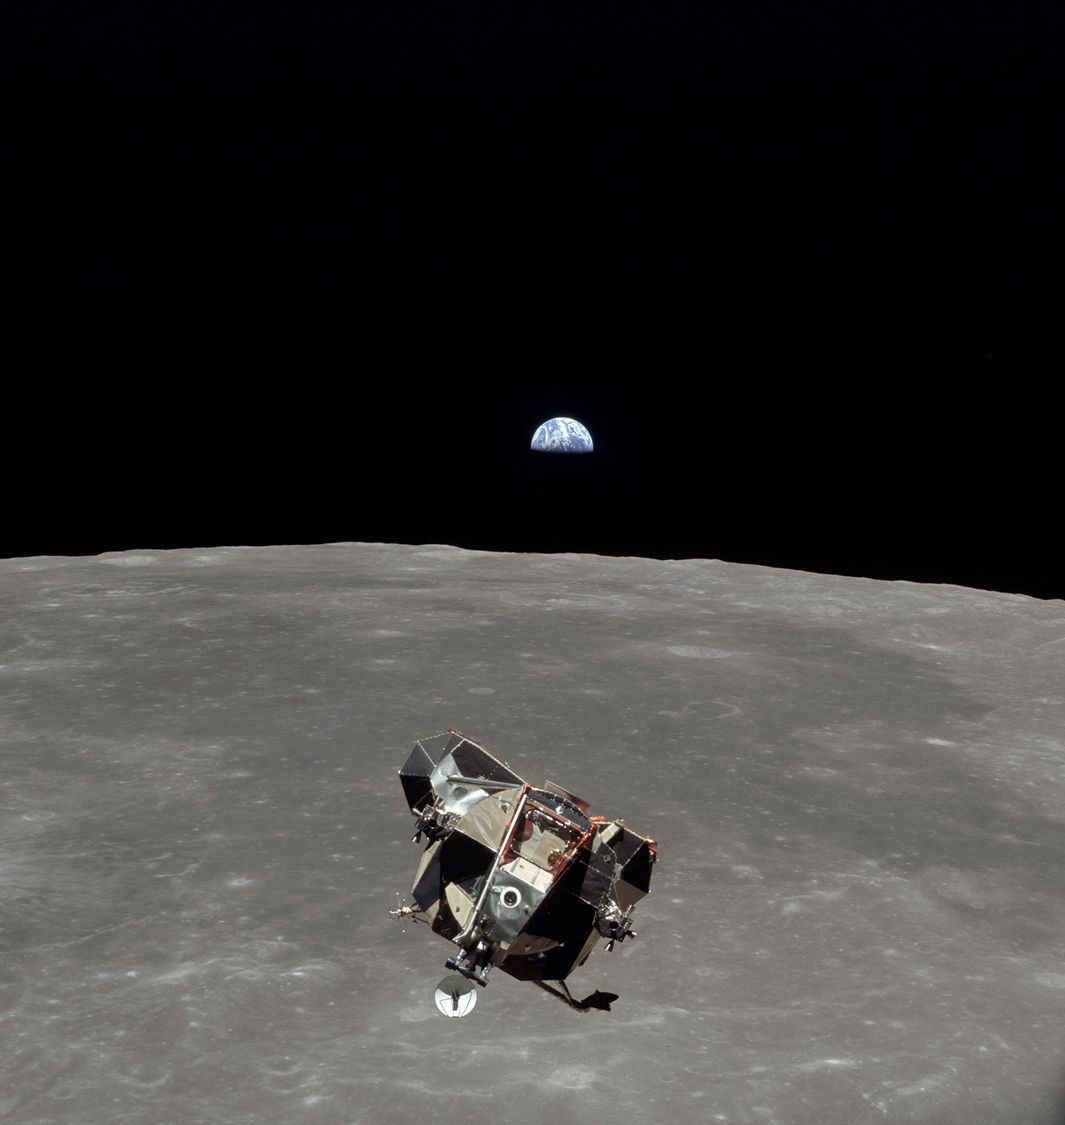 Lunar module Eagle flies over the moon